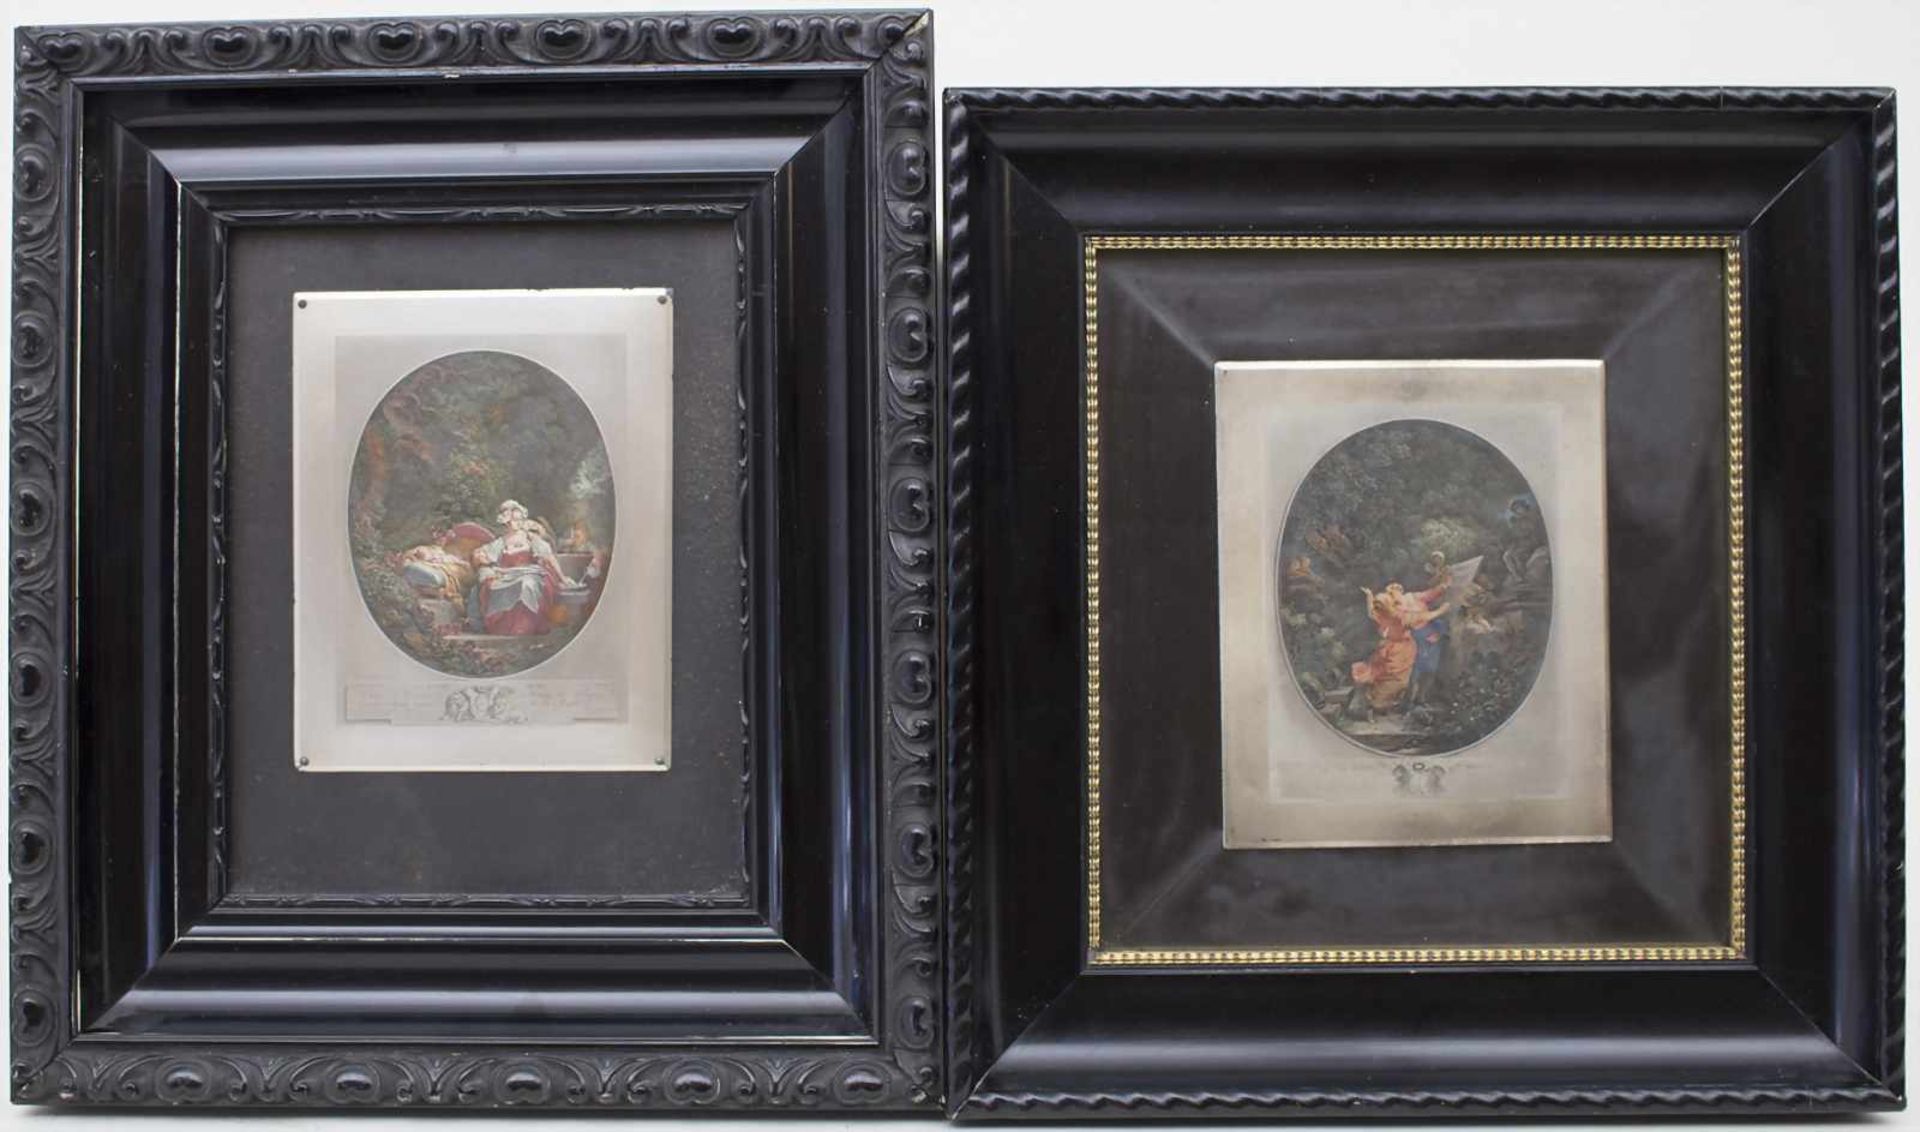 Nicolas de Launay (1739-1792) u.a., 2 gestochene Stahlplatten / 2 engraved steel plates, 18. Jh.